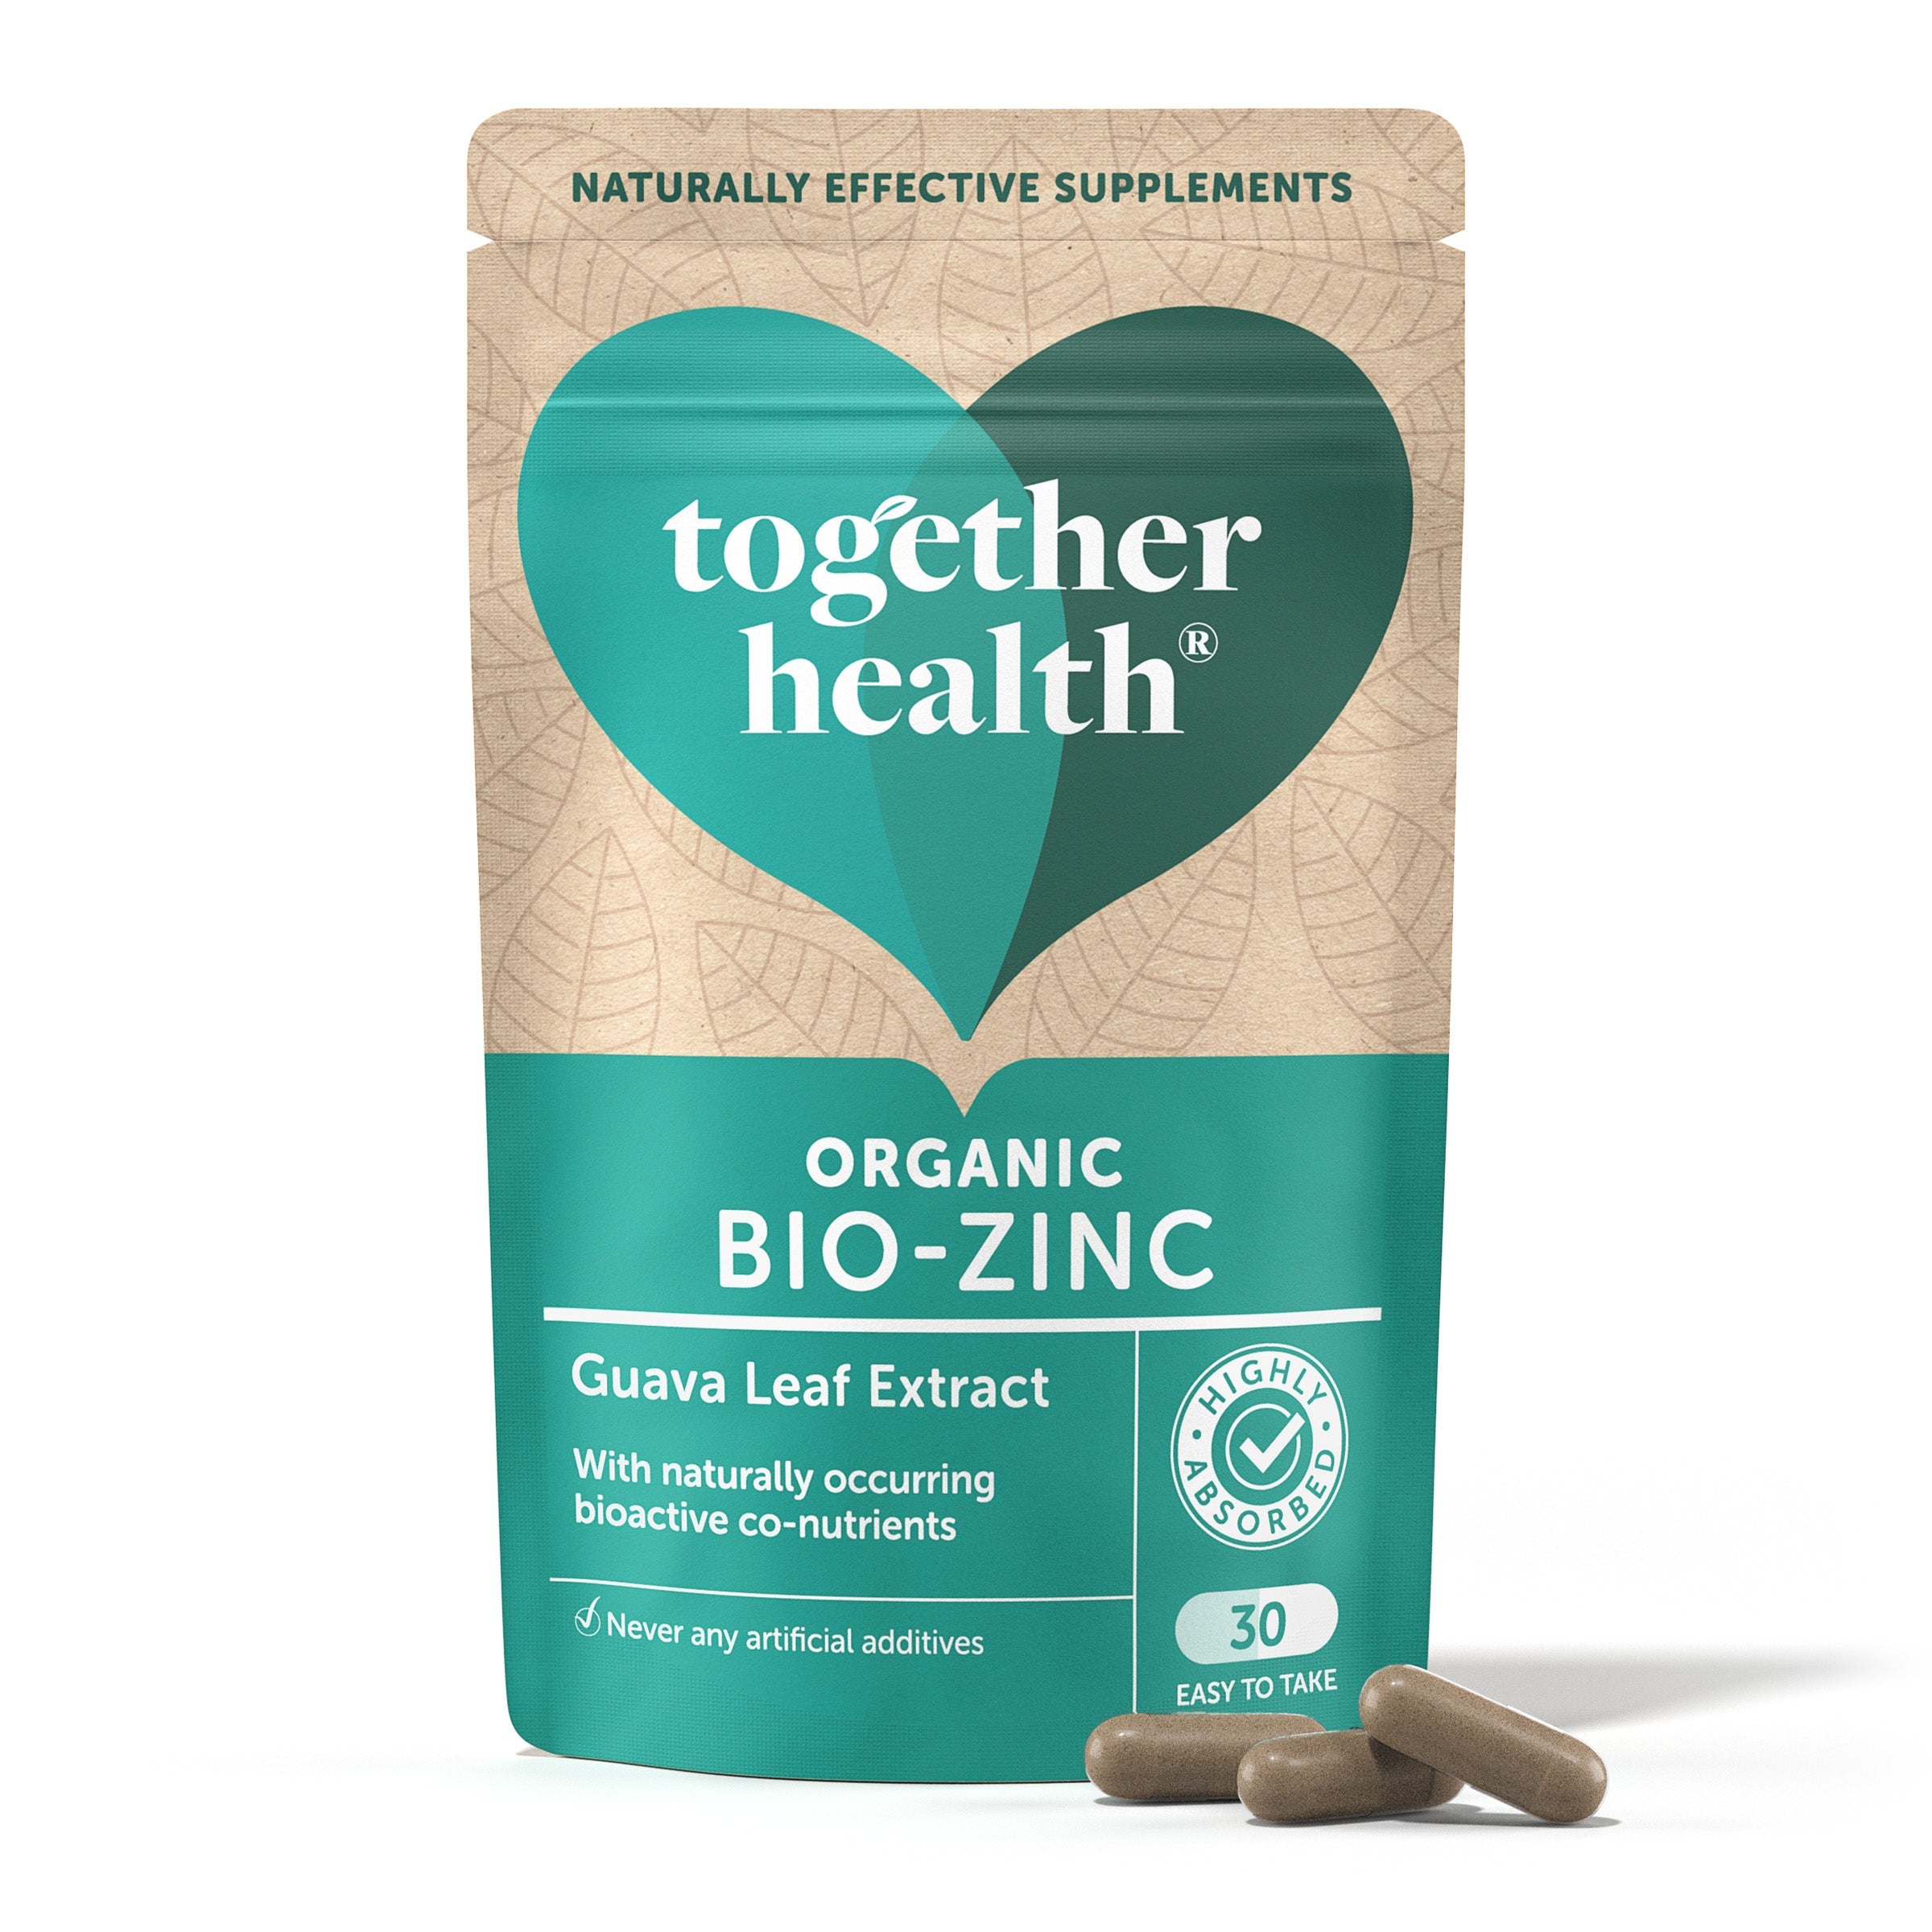 Together Health Organic Bio-Zinc